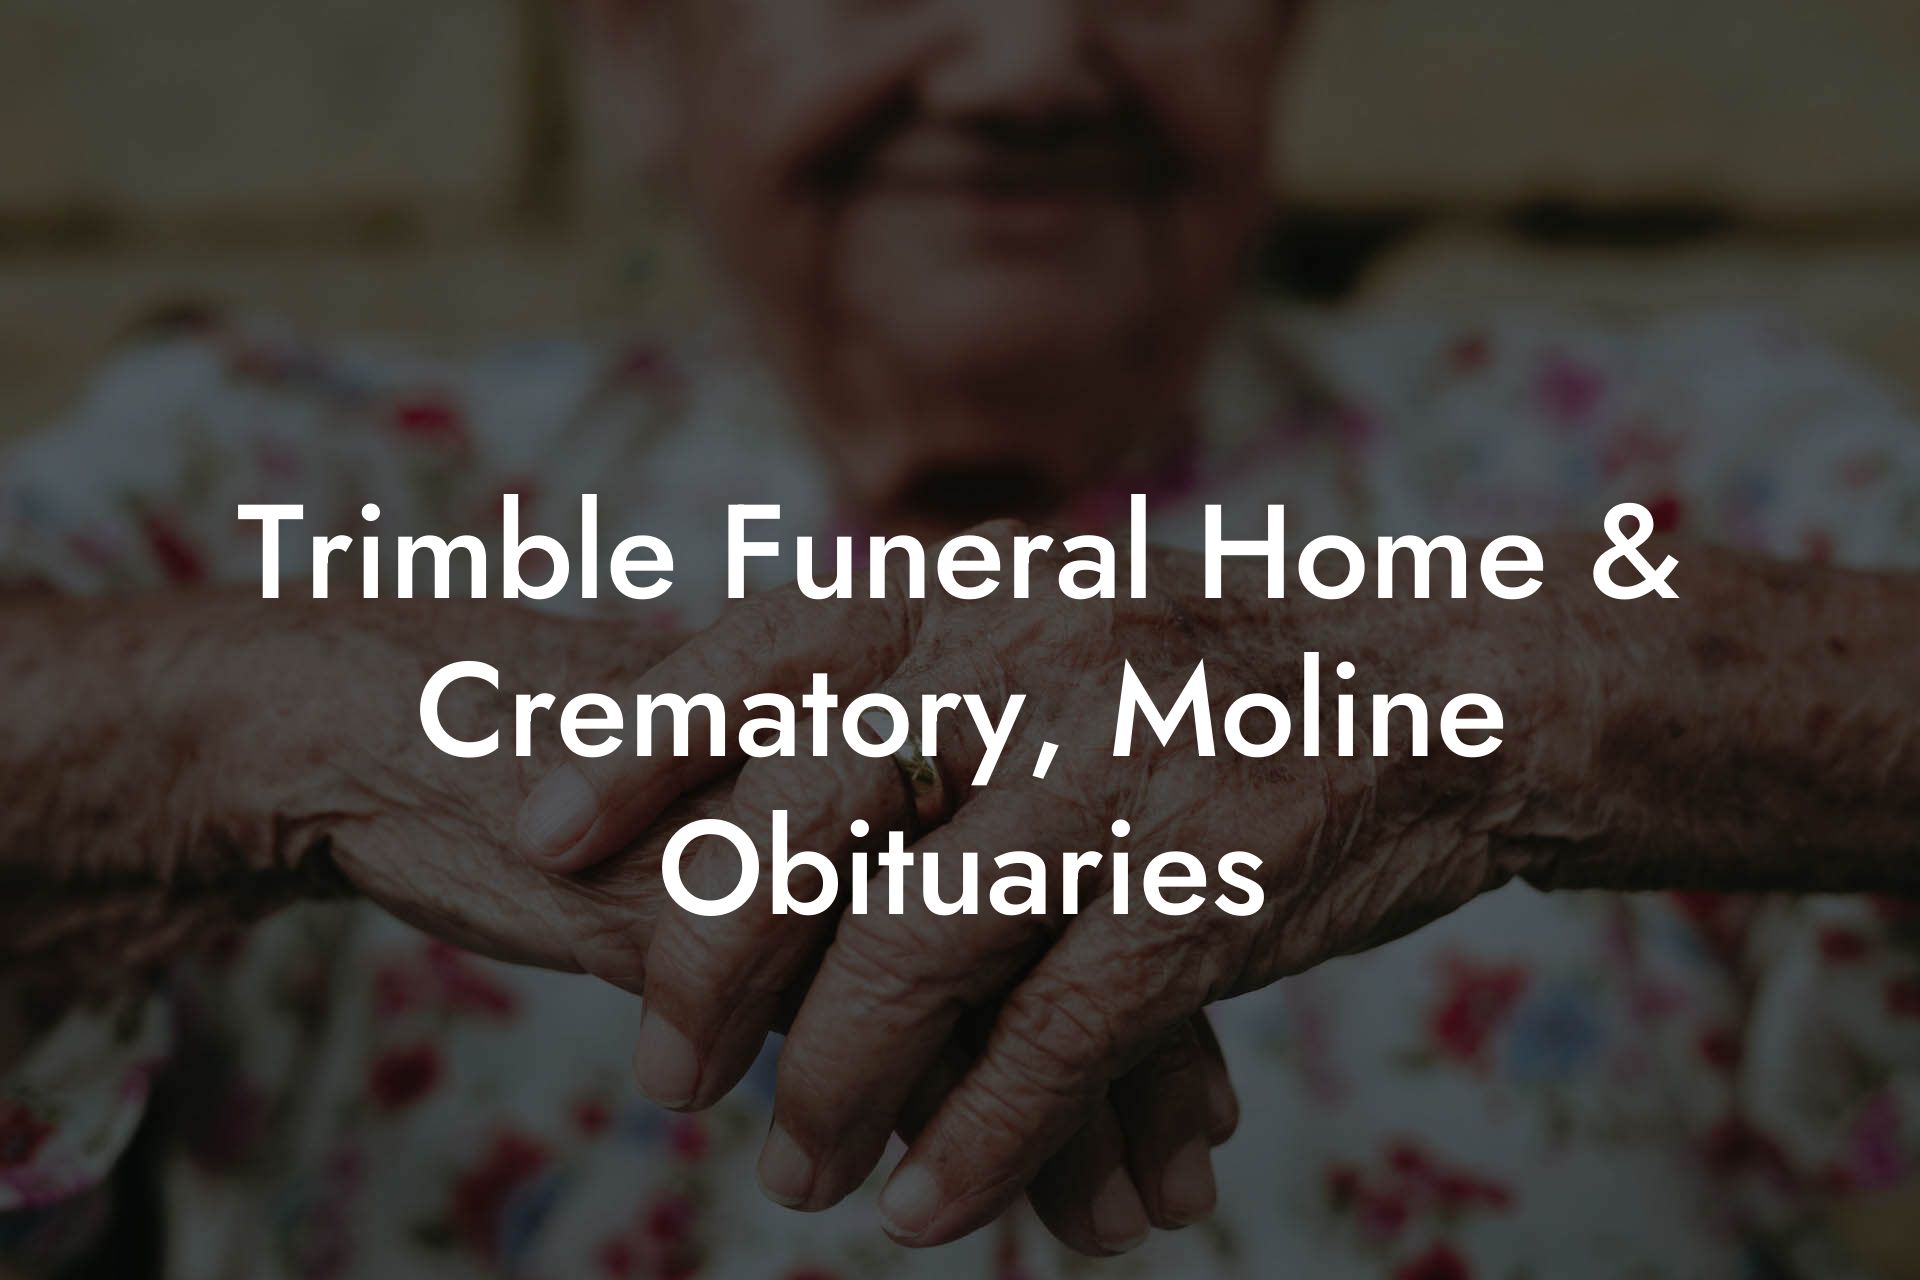 Trimble Funeral Home & Crematory, Moline Obituaries